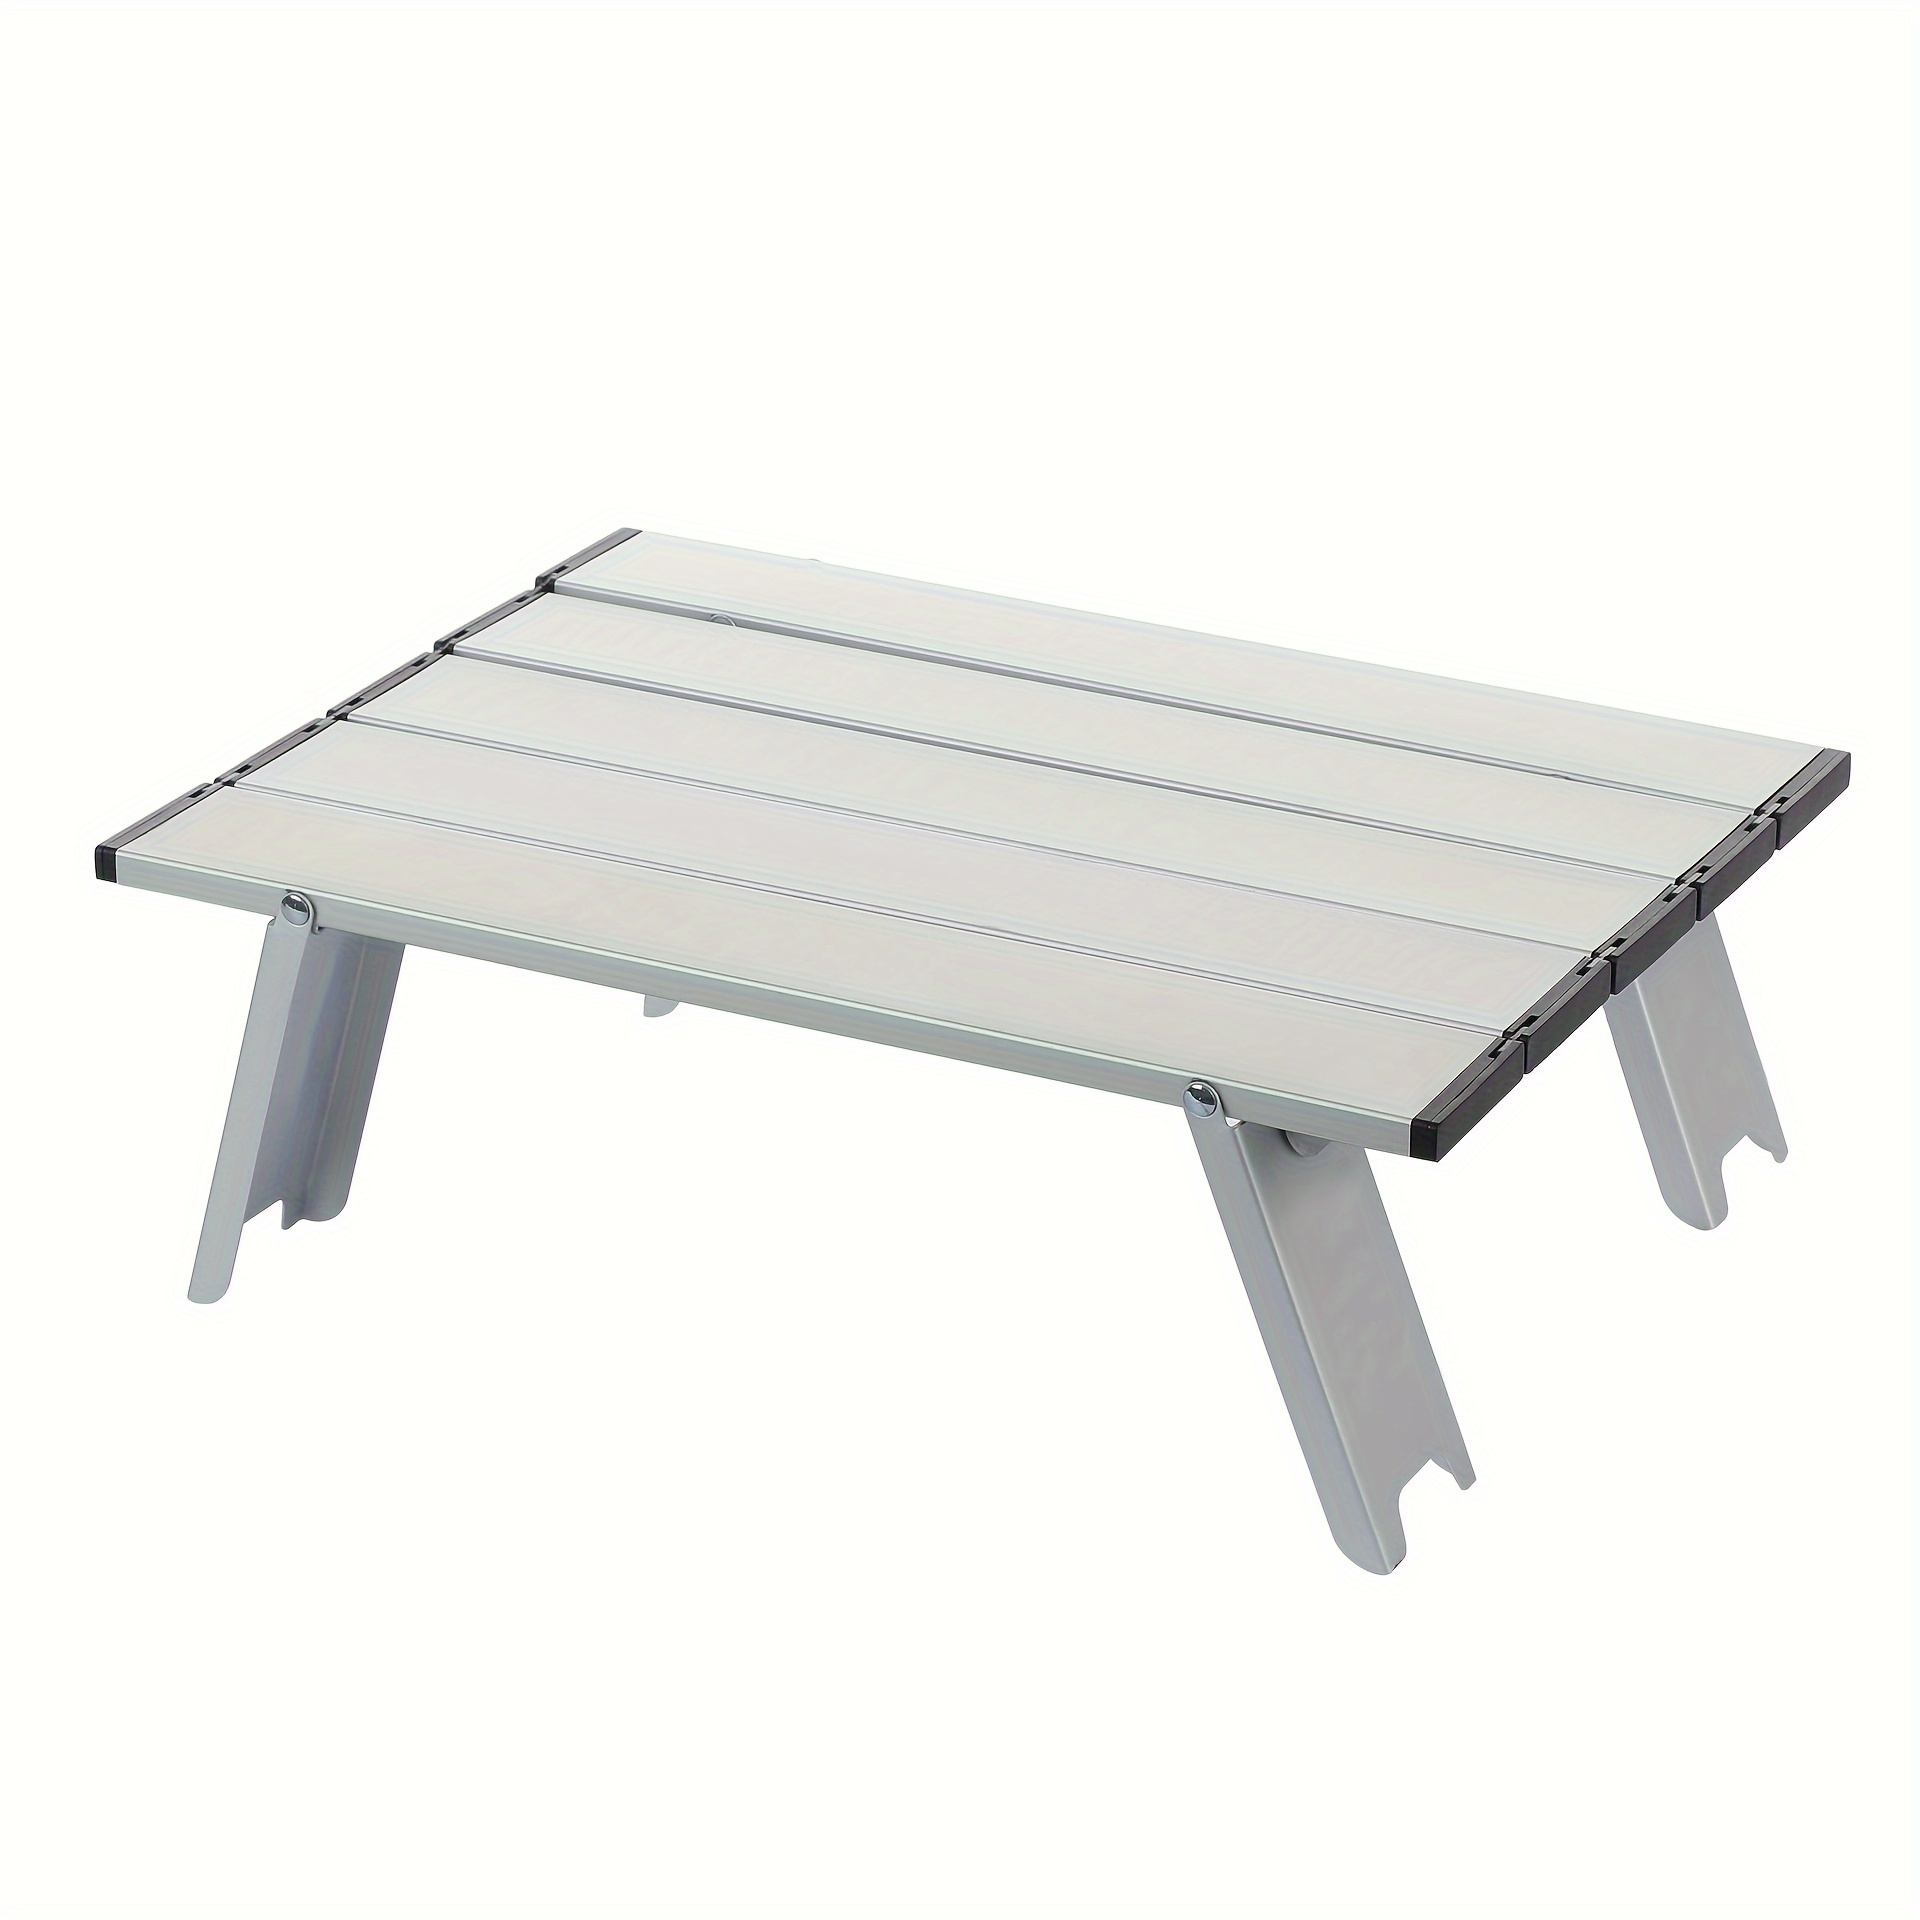 Table pliante extérieure en alliage d'aluminium Camping pique